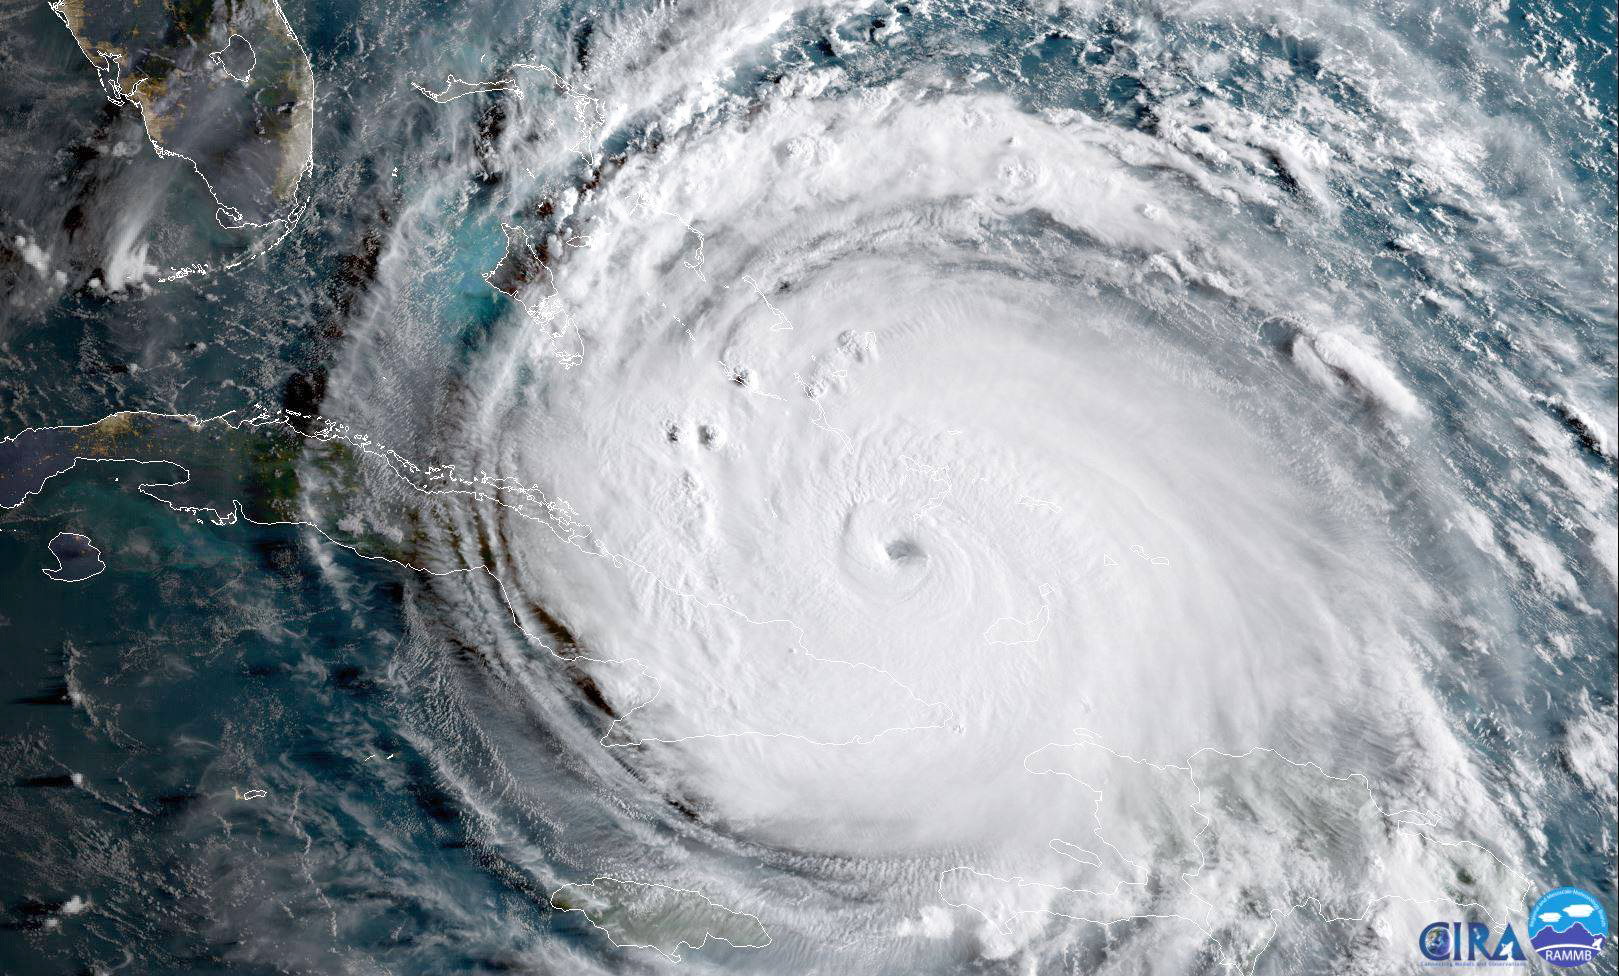 GOES-16 satellite image of Hurricane Irma.